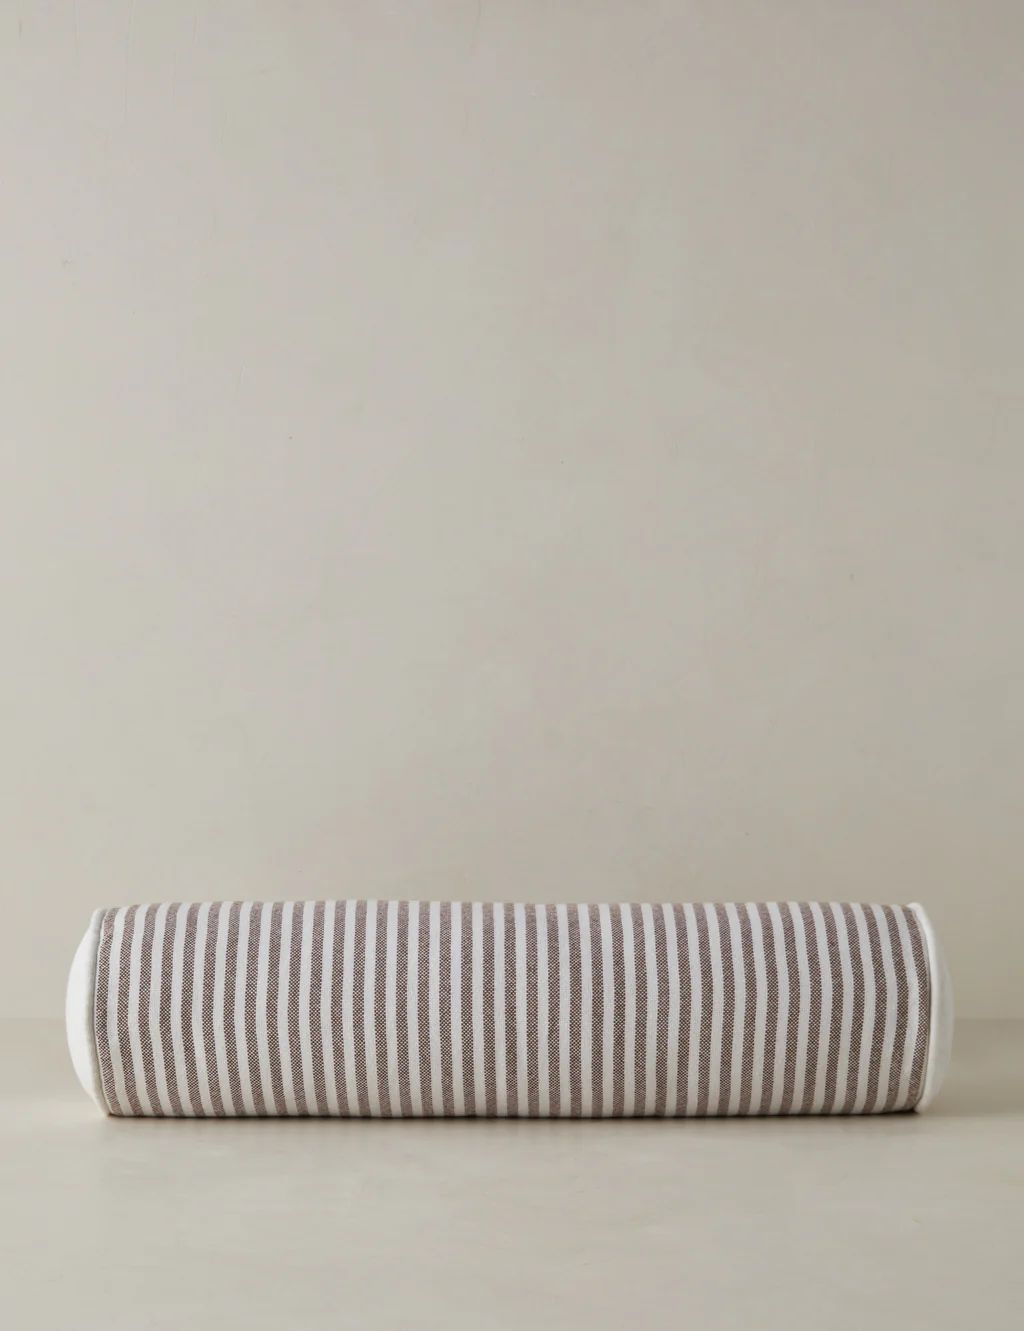 Littu Indoor / Outdoor Striped Bolster Pillow by Sarah Sherman Samuel | Lulu and Georgia 